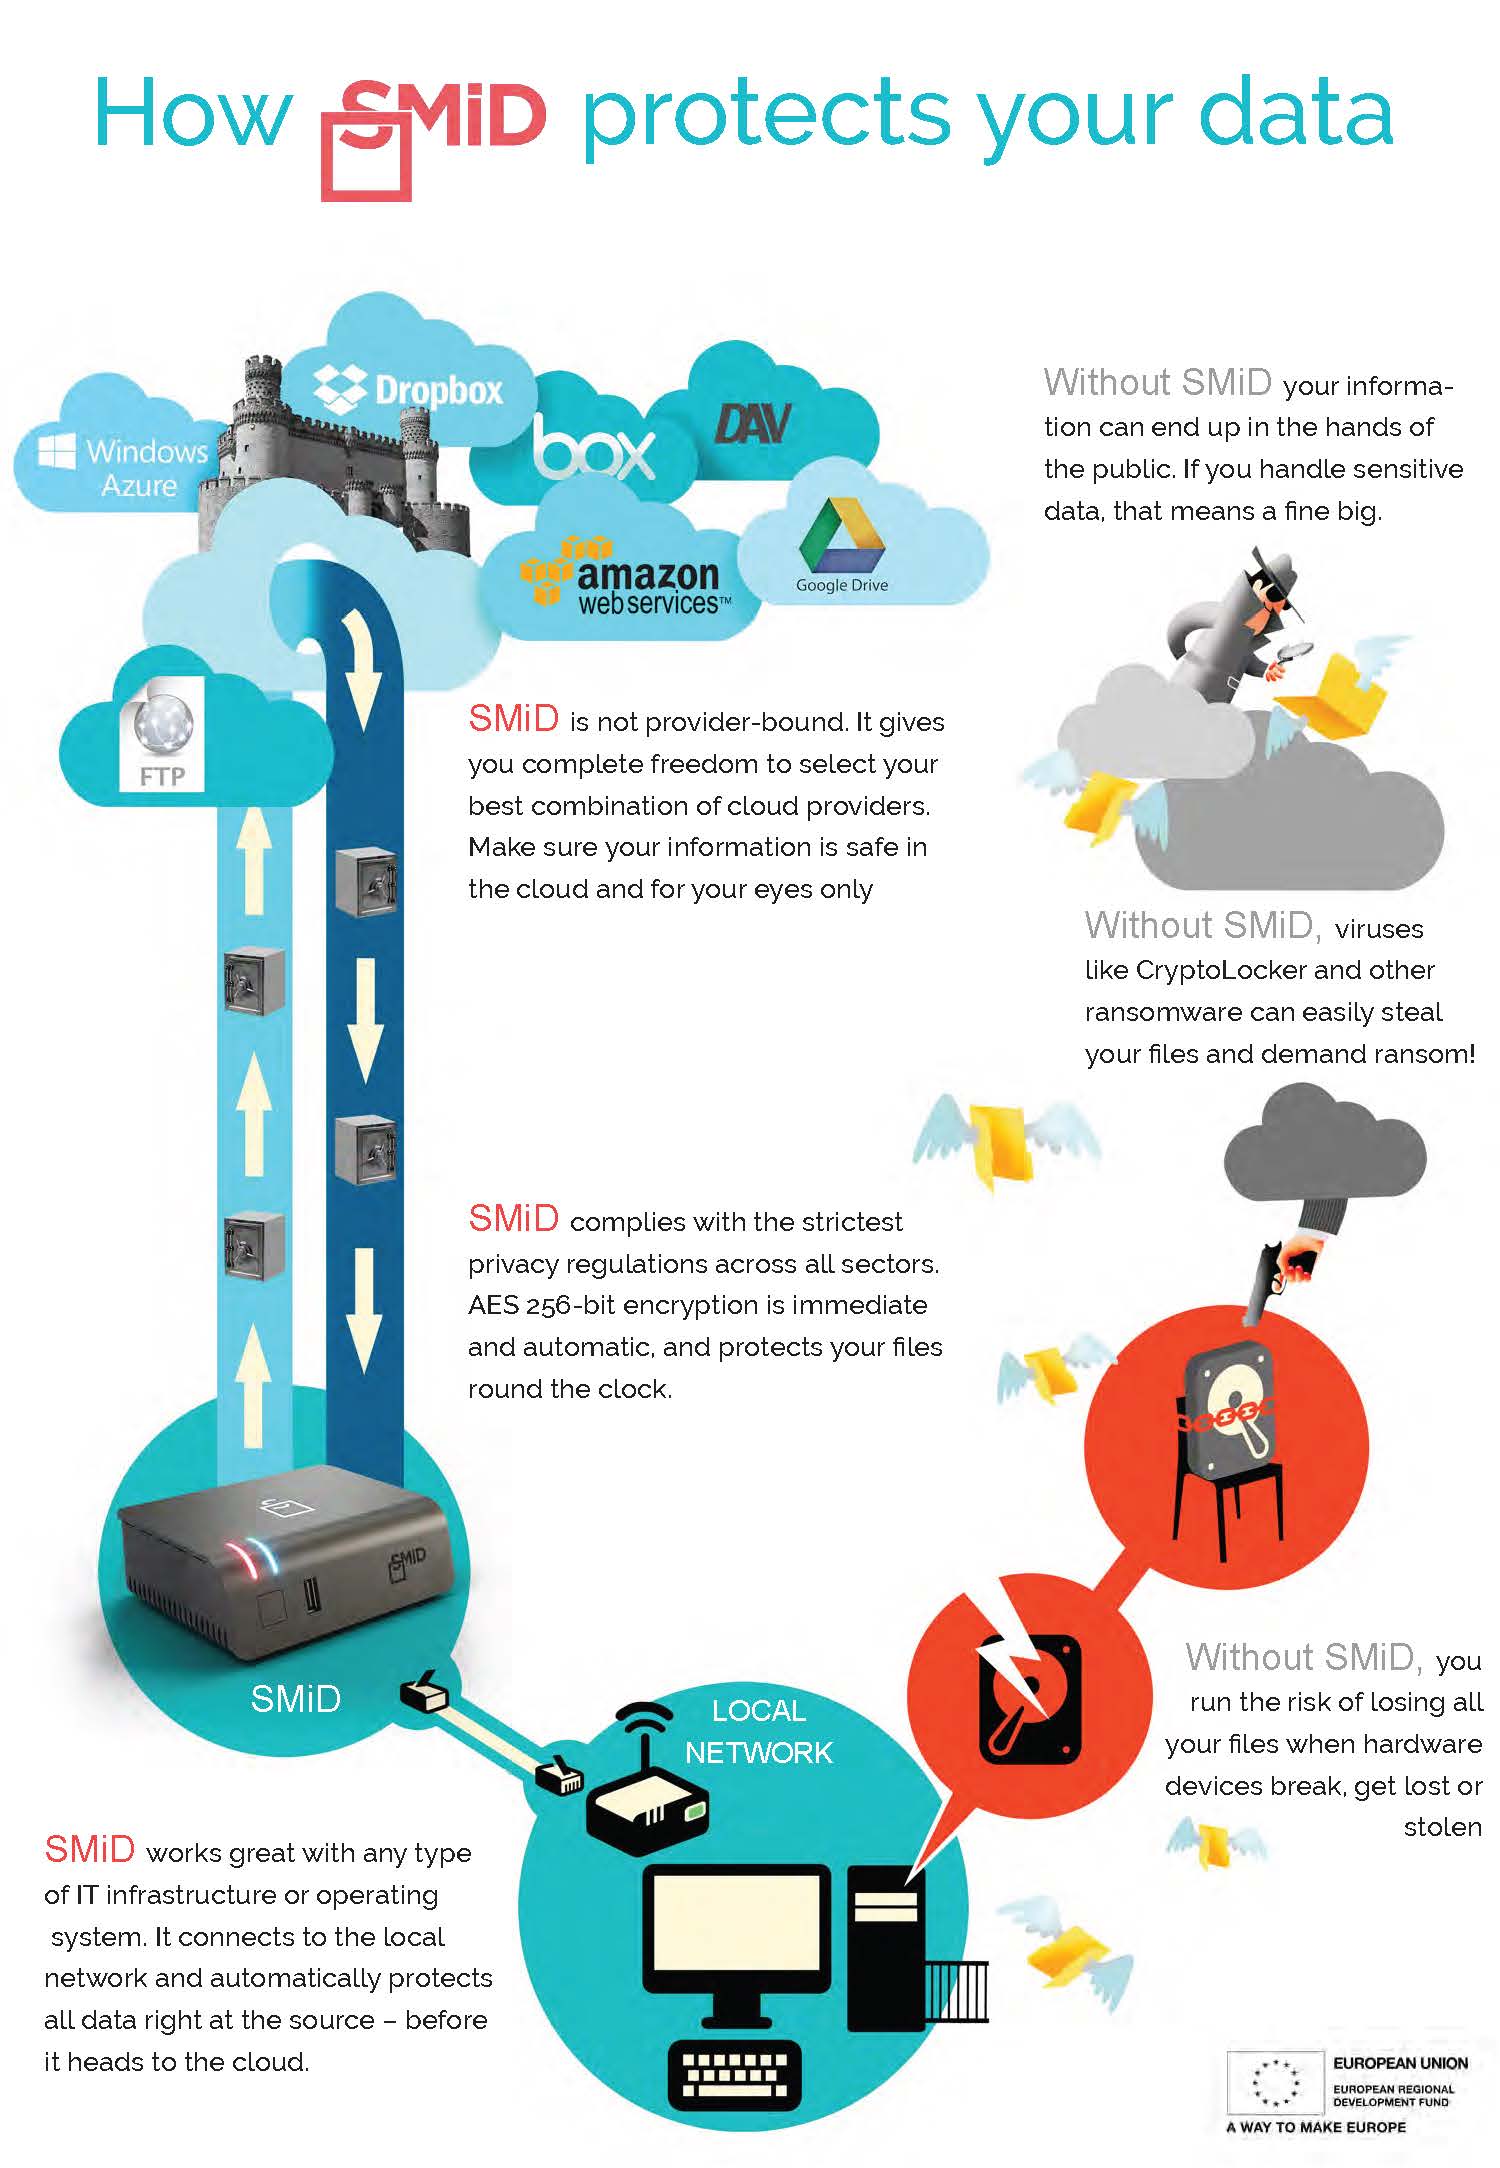 Enterprise Cloud Computing 2016 Trends - Infographic